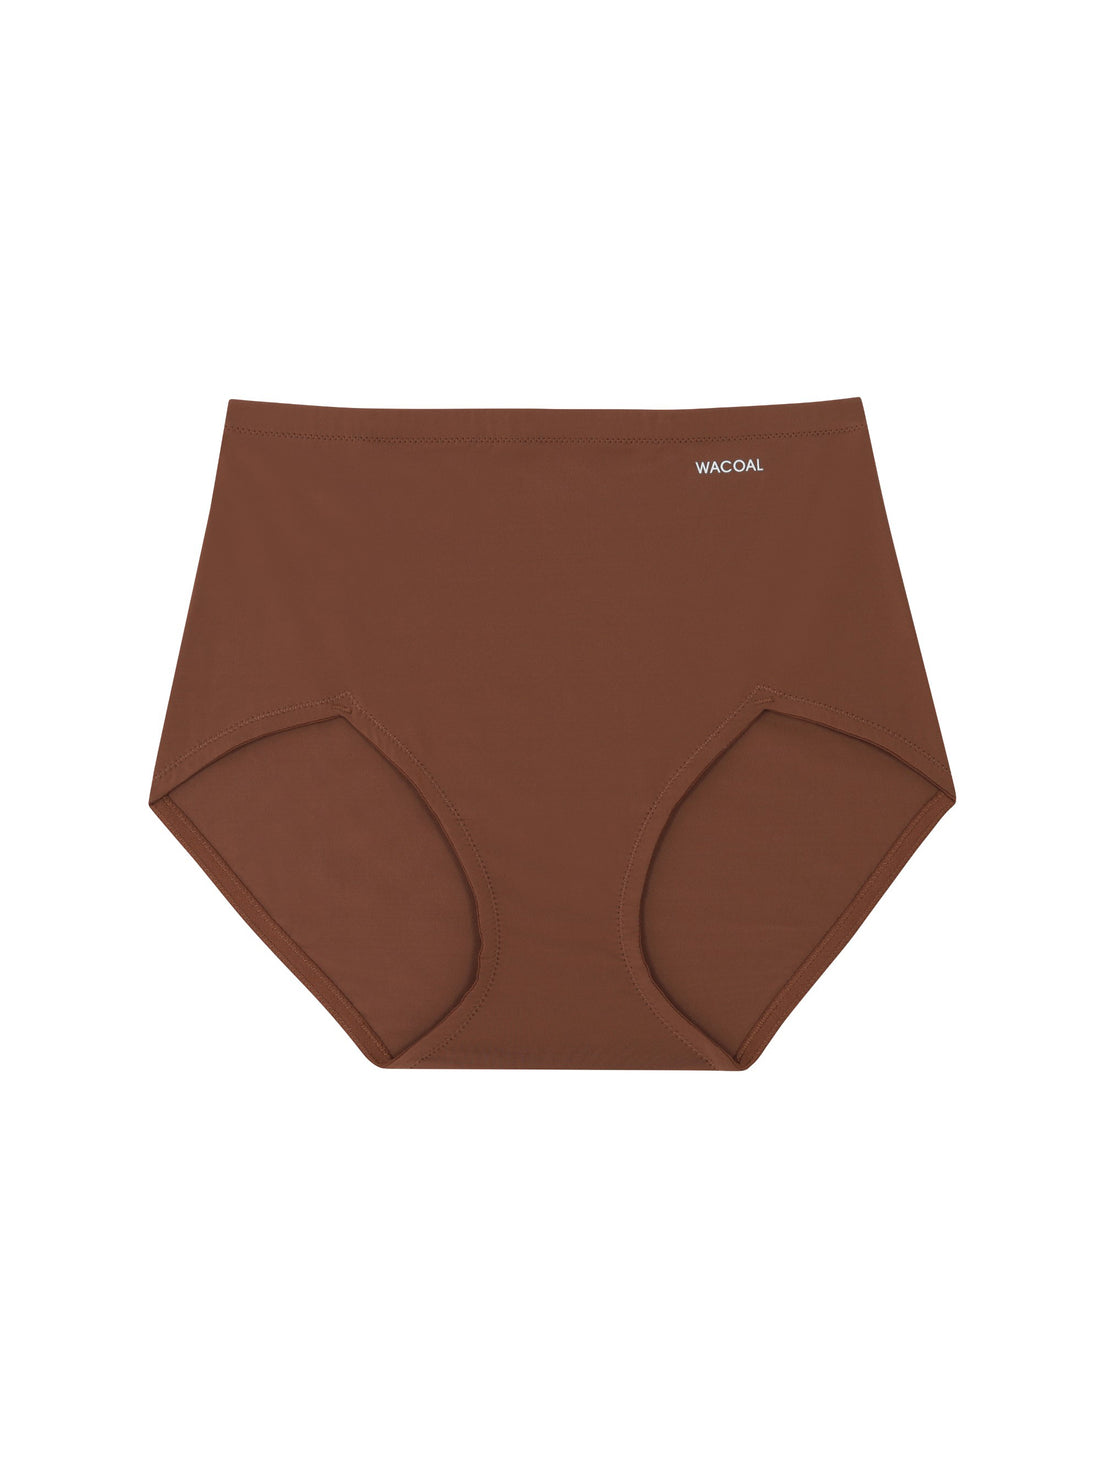 Wacoal H-fit secret support กางเกงในกระชับหน้าท้อง รูปแบบเต็มตัว (SHORT) รุ่น WU4959  สีน้ำตาล (BR)